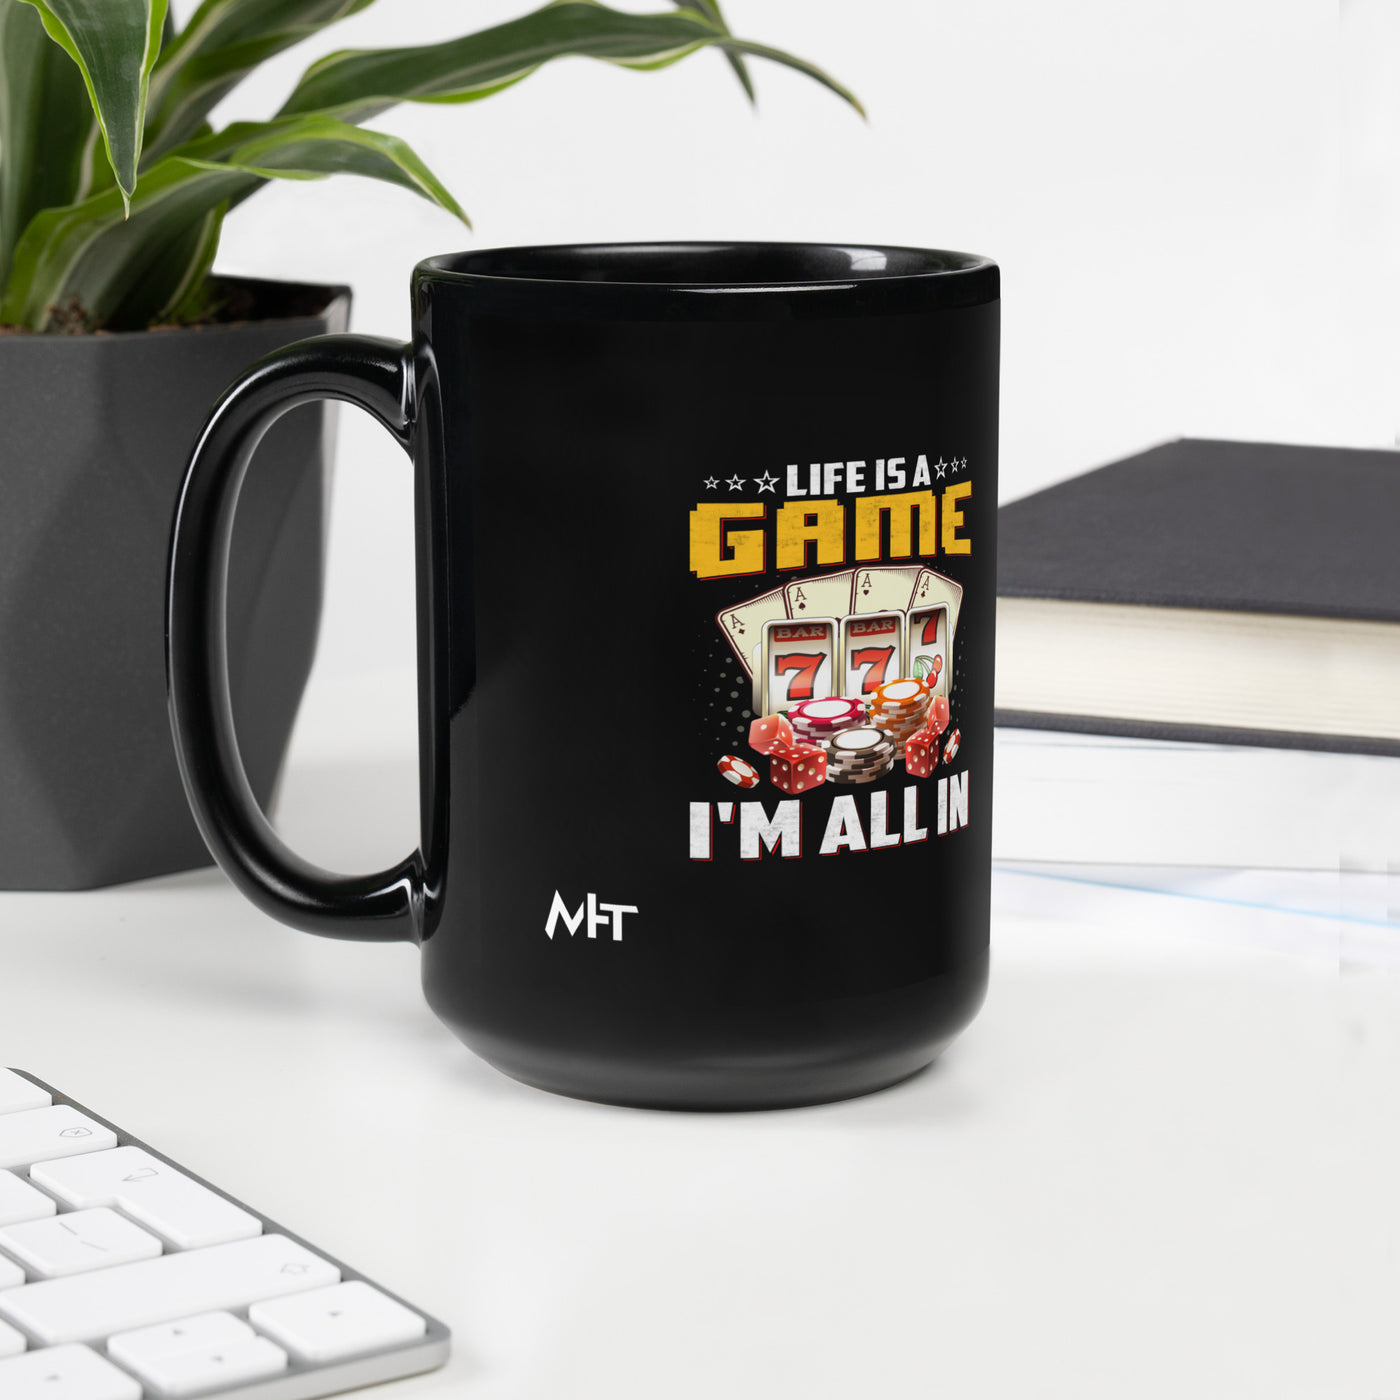 Life is a Game: I'm all in - Black Glossy Mug